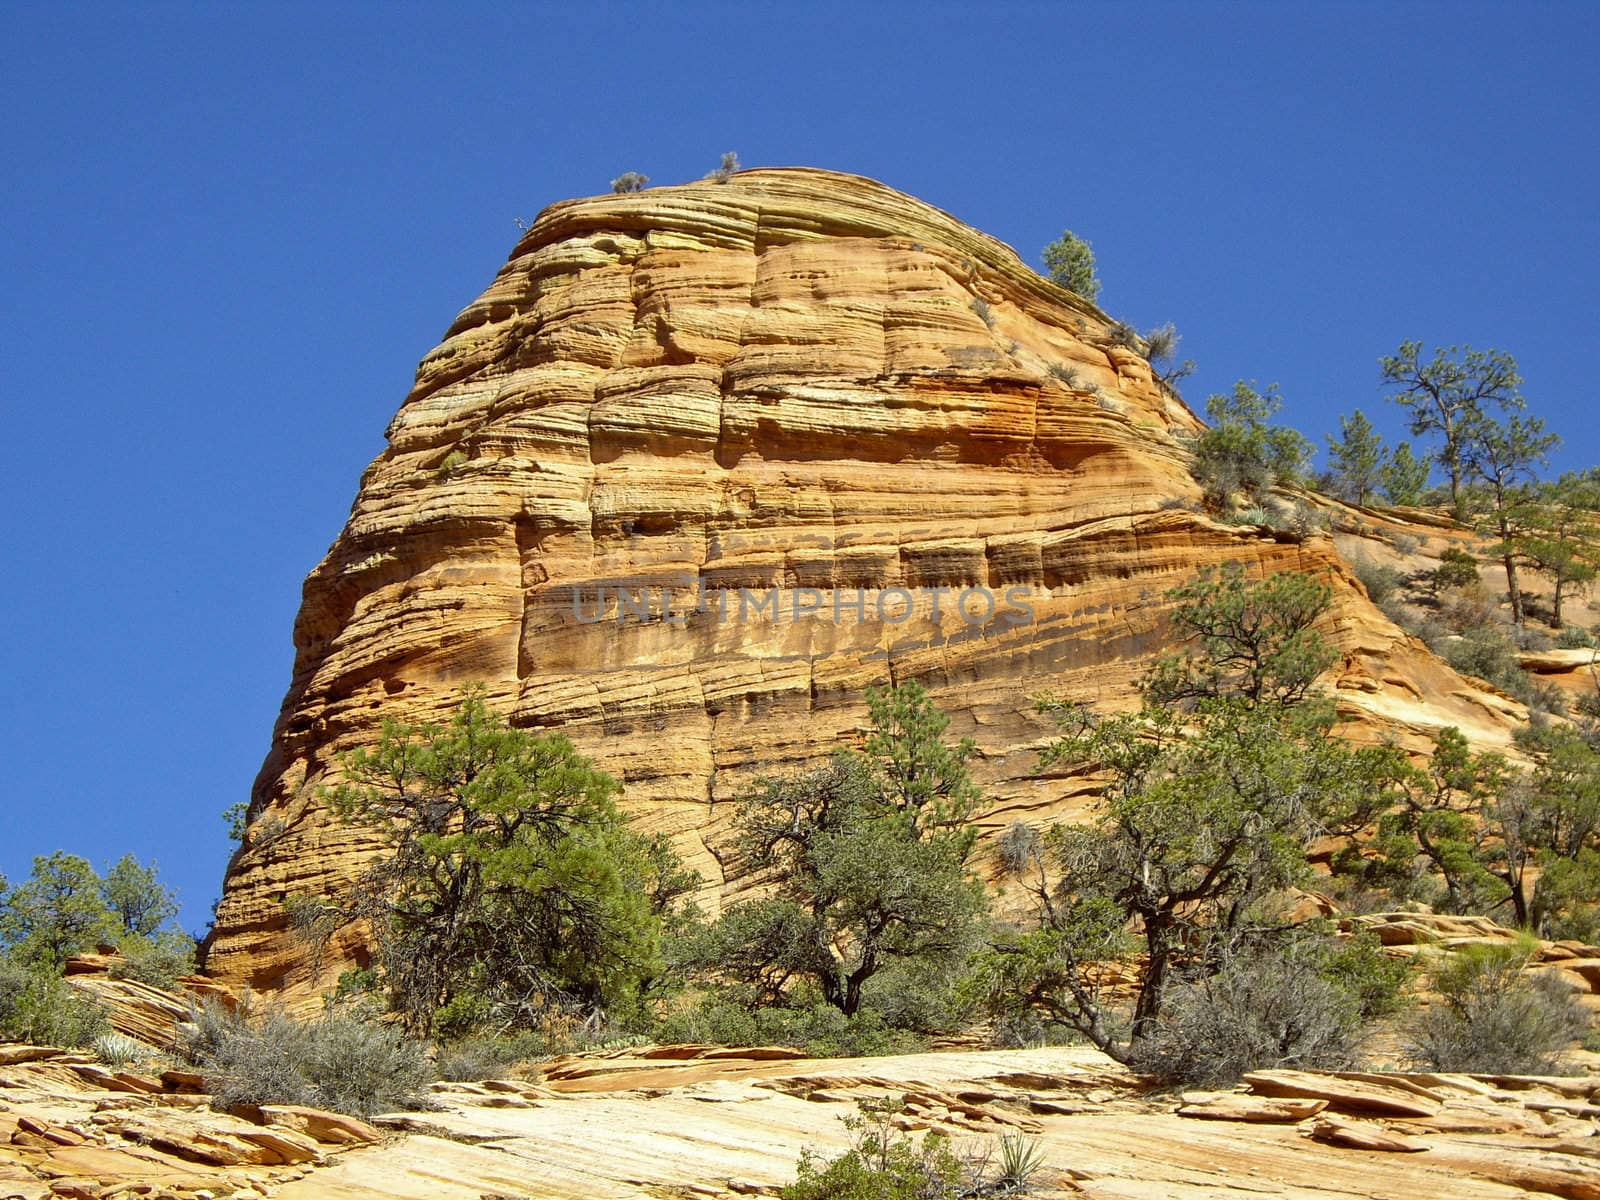 Desert Rock by emattil